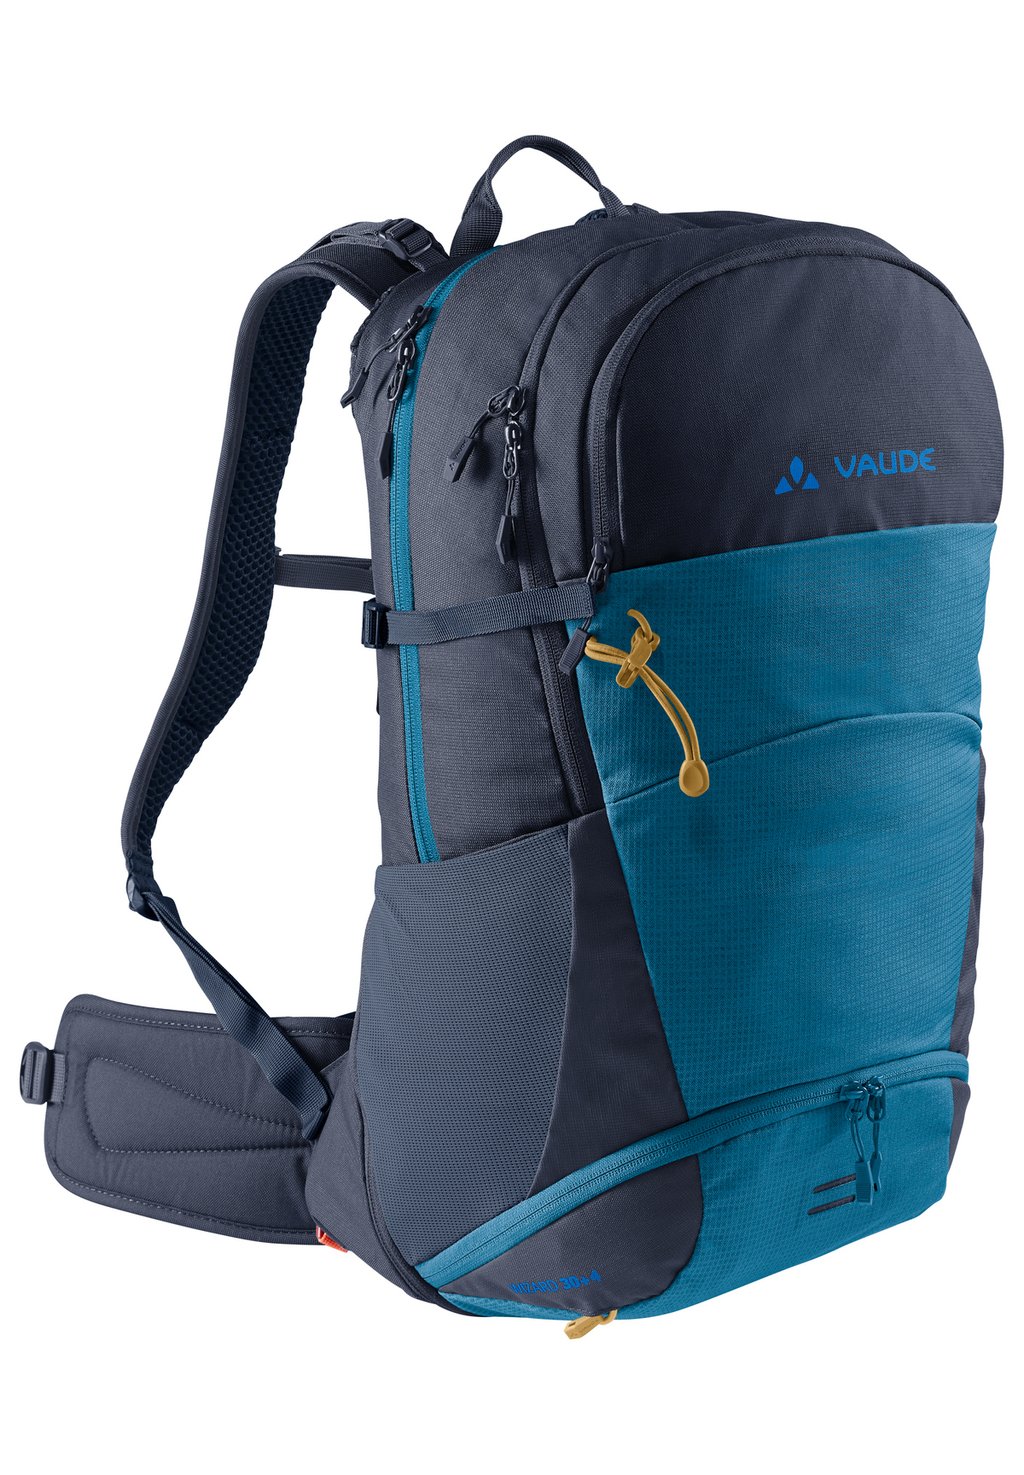 Треккинговый рюкзак WIZARD 30+4 Vaude, цвет kingfisher